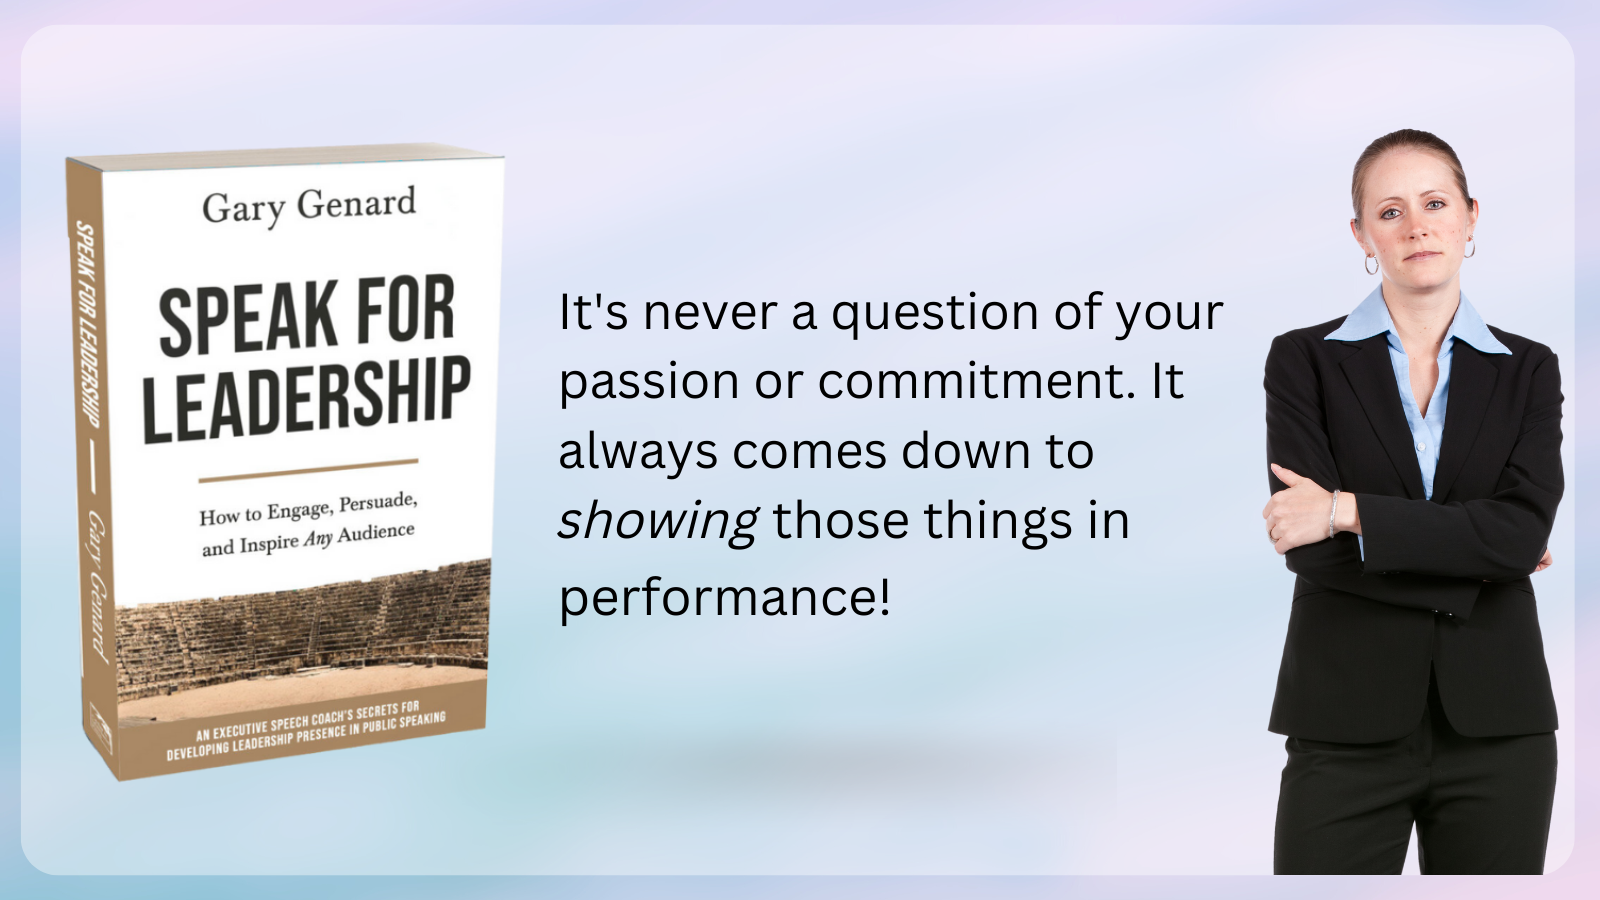 Dr. Gary Genard's book on speaking as a leader, Speak for Leadership